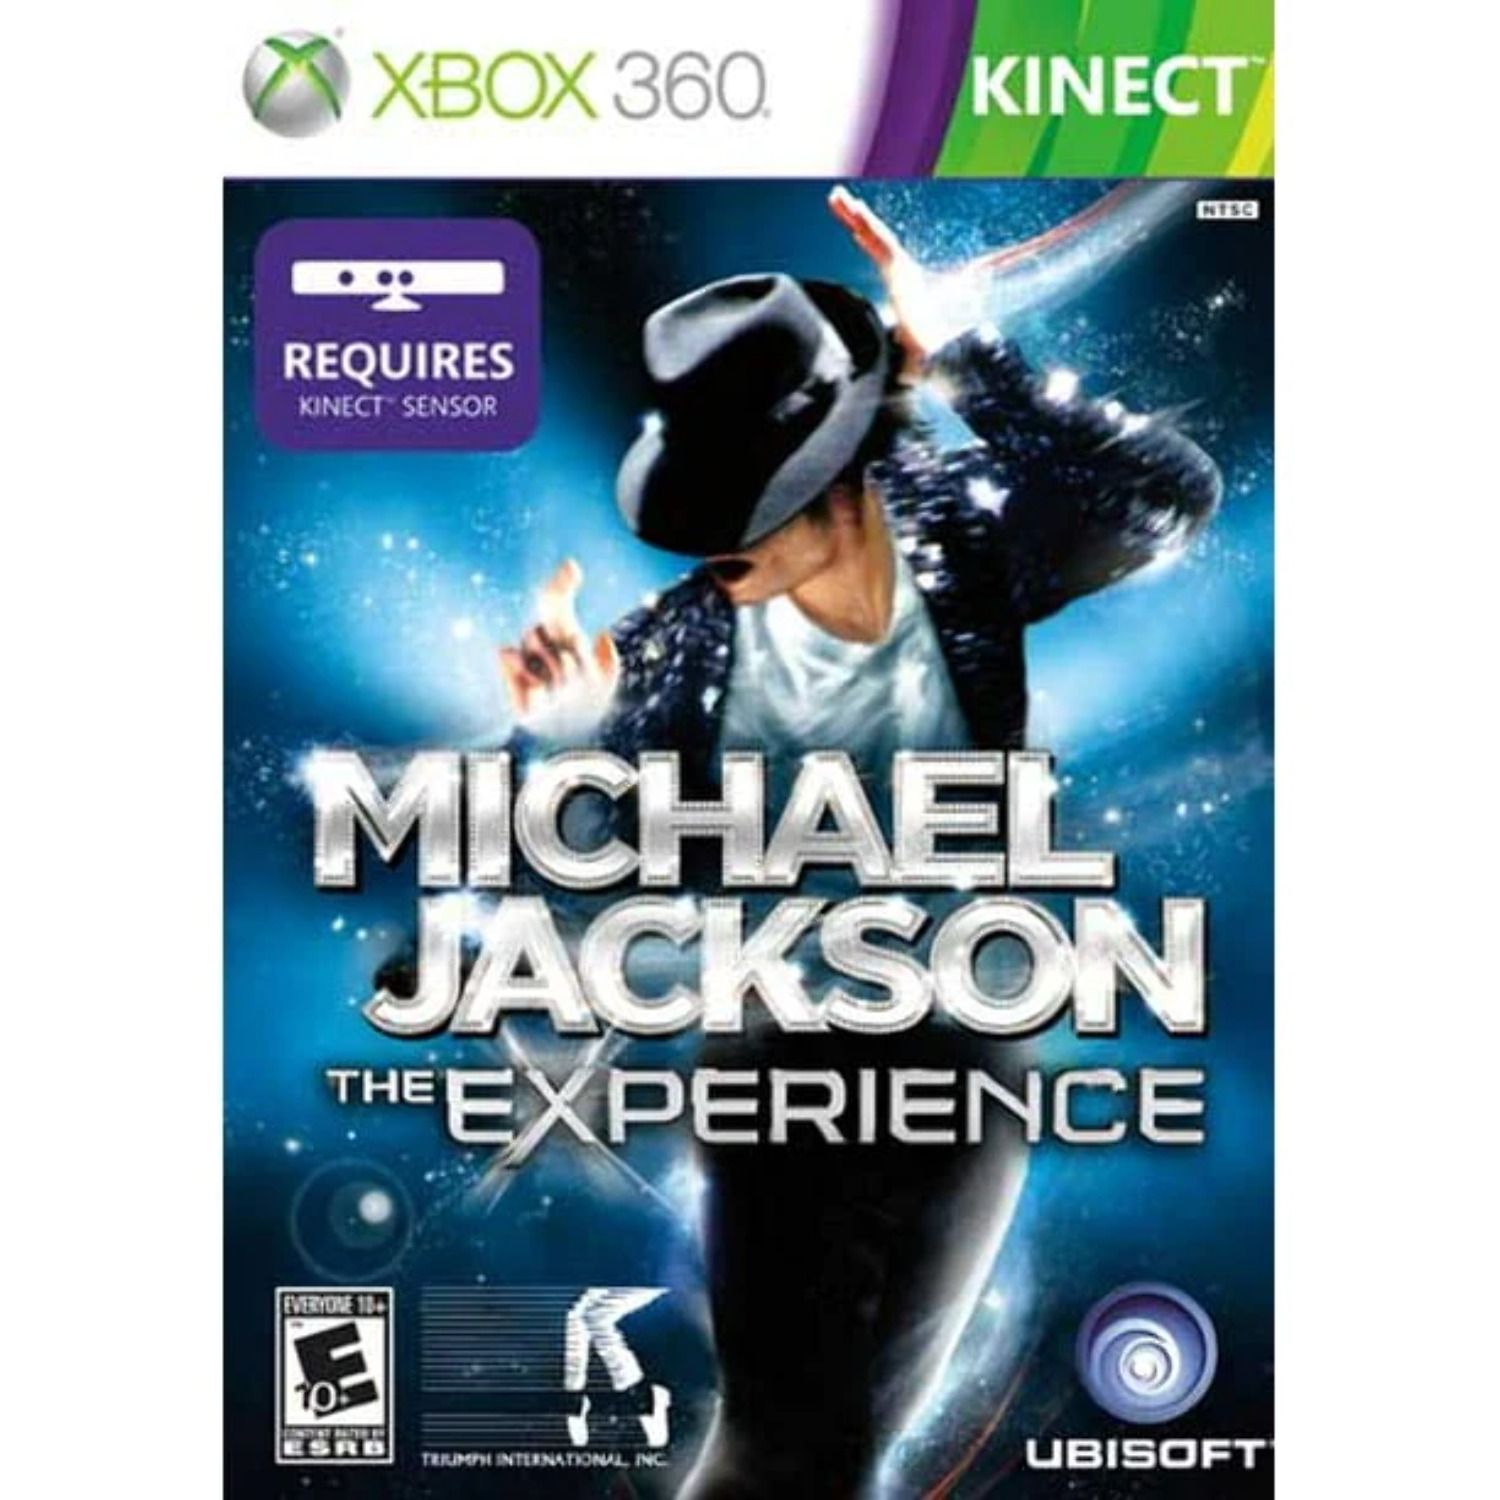 Michael Jackson The Experience (Xbox 360) Ubisoft, 8888526292 - image 1 of 6